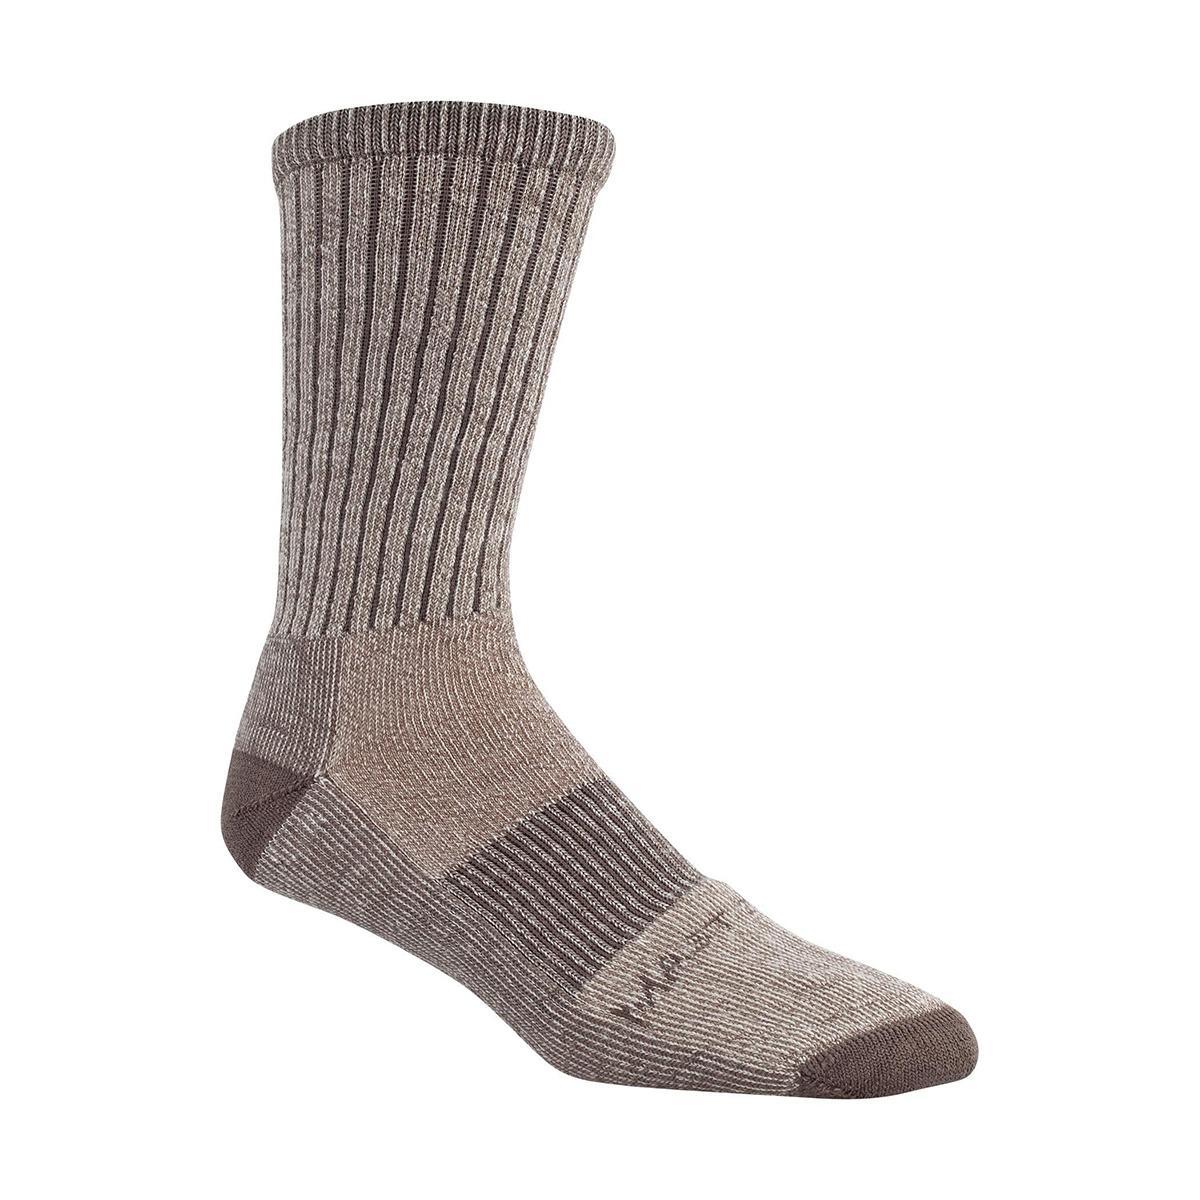 American Knitted Premium Merino Wool Socks for Men and Women. – People Socks